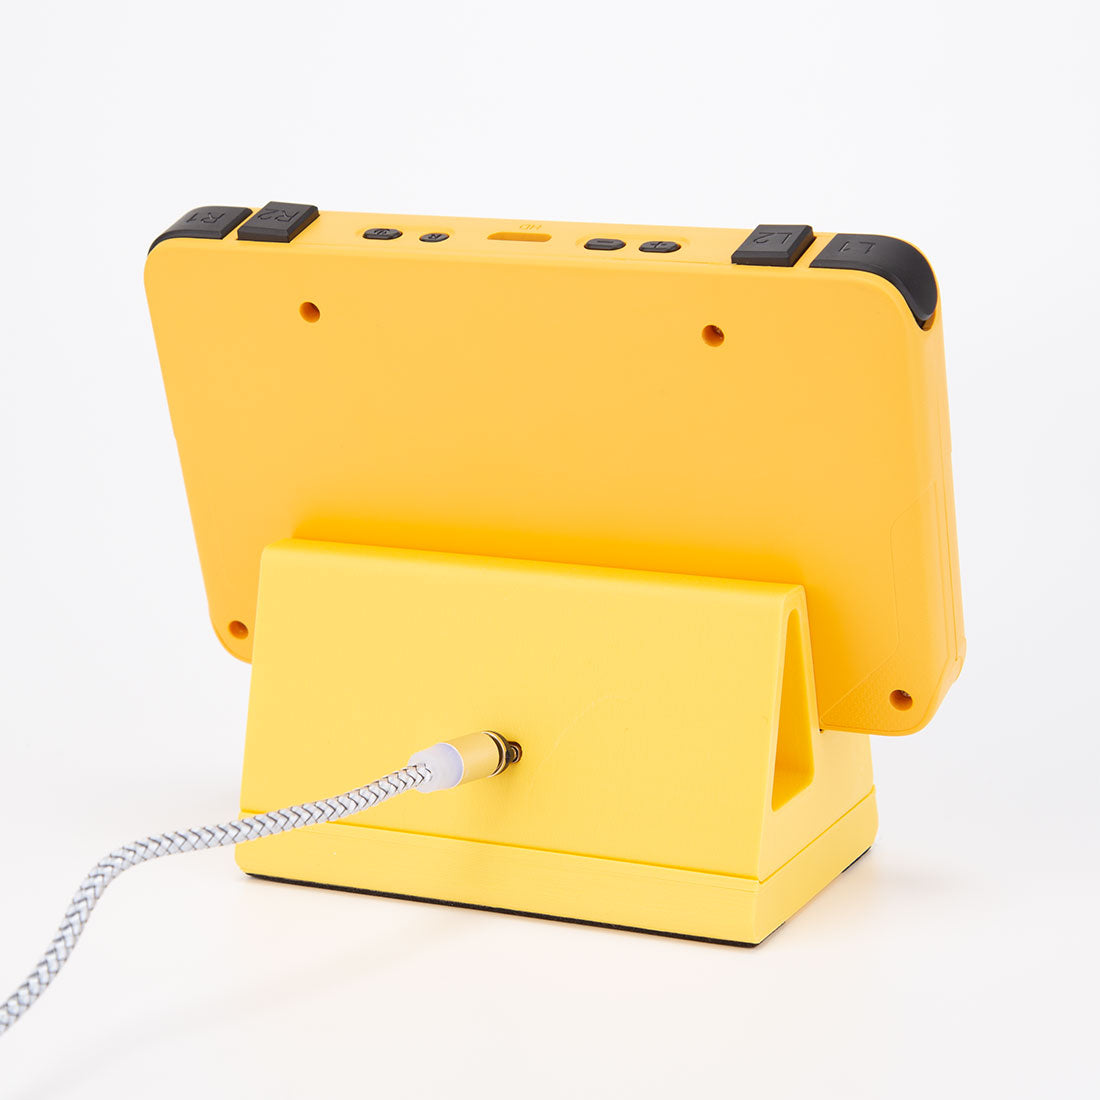 3D Printed Magnetic Charging Dock for Powkiddy RGB30 - Mechdiy